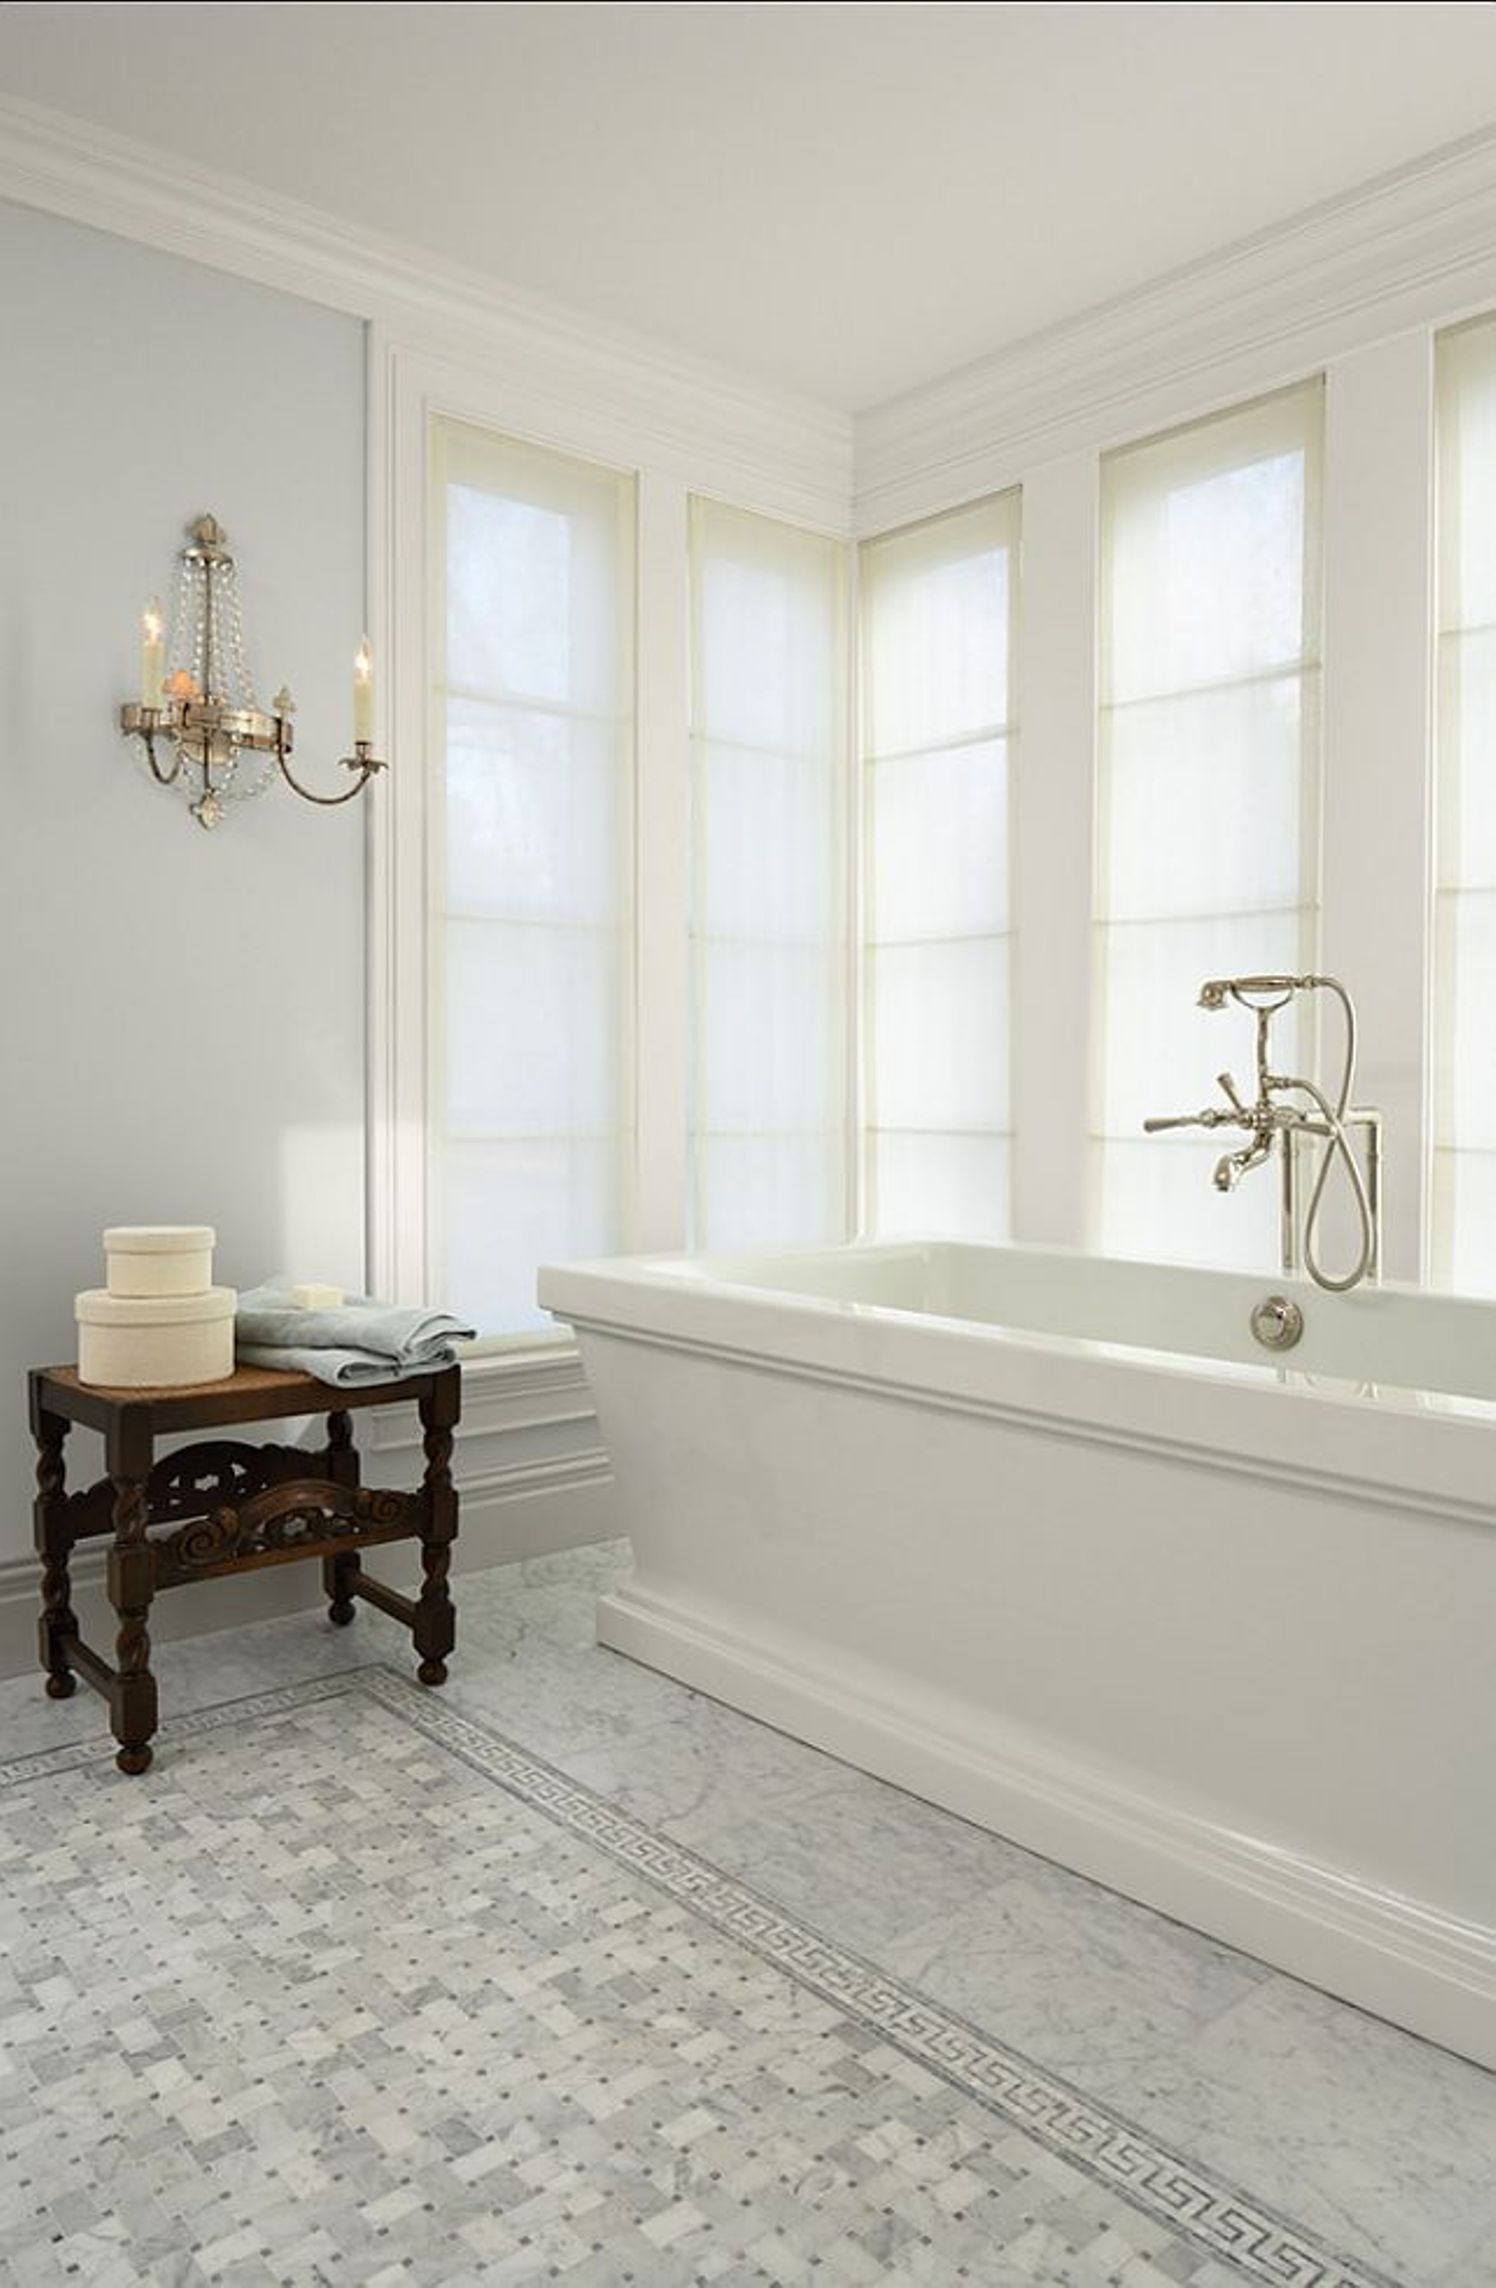 classy-white-design-of-bathroom-tile-ideas-on-the-floor